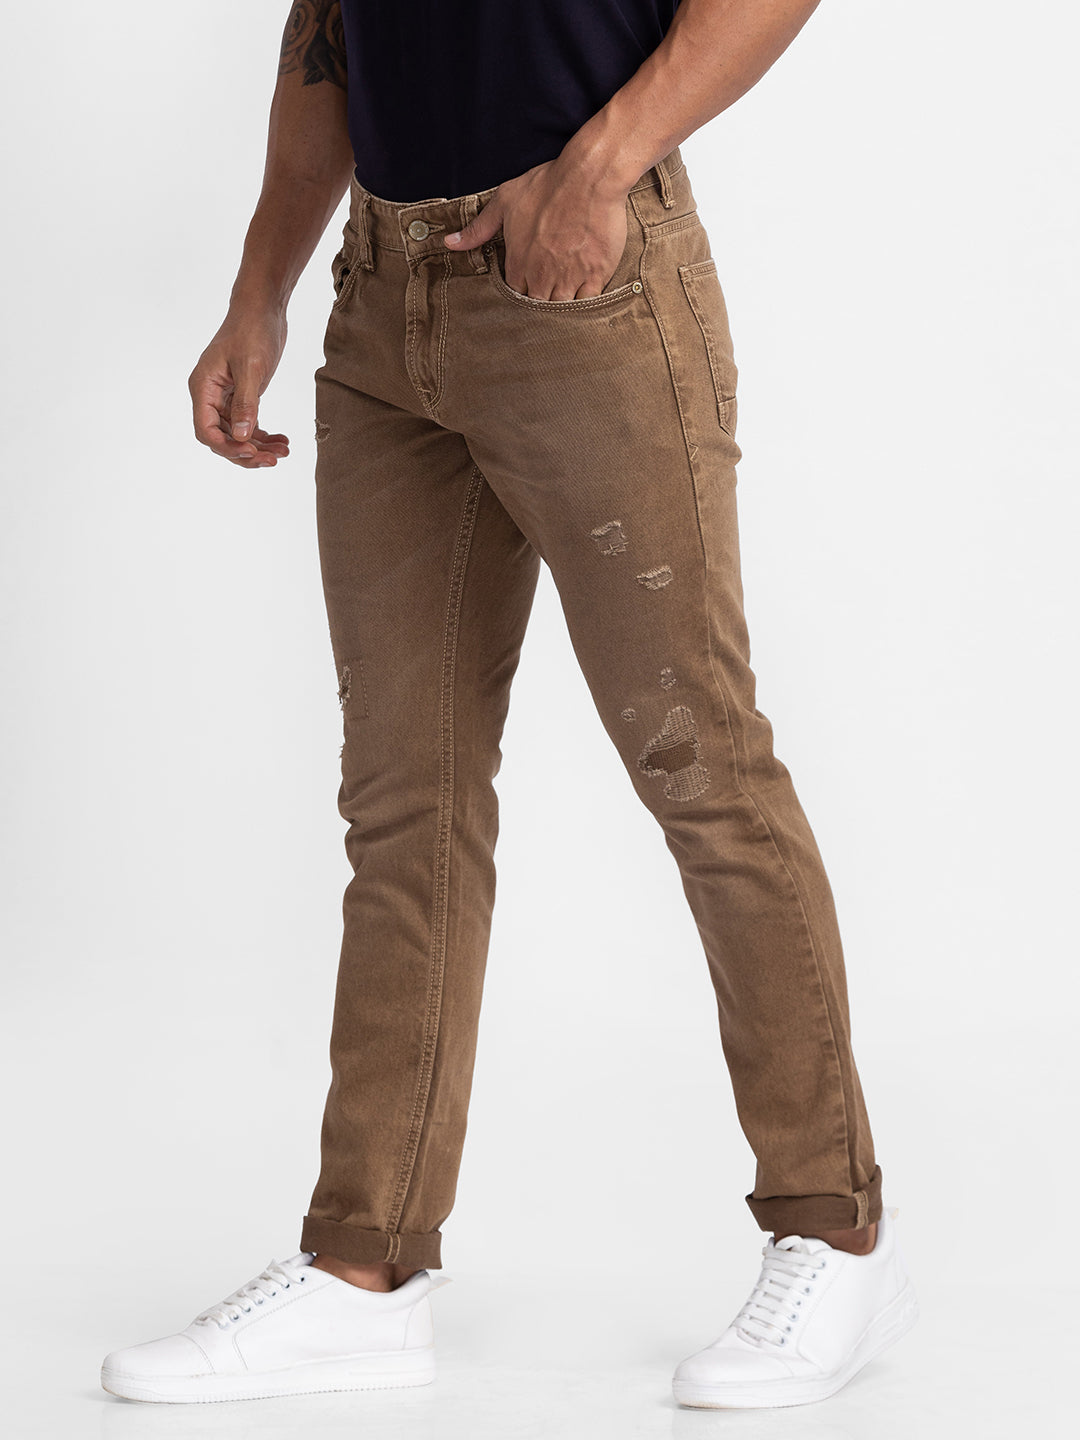 Spykar Khaki Cotton Slim Fit Narrow Length Jeans For Men (Skinny)